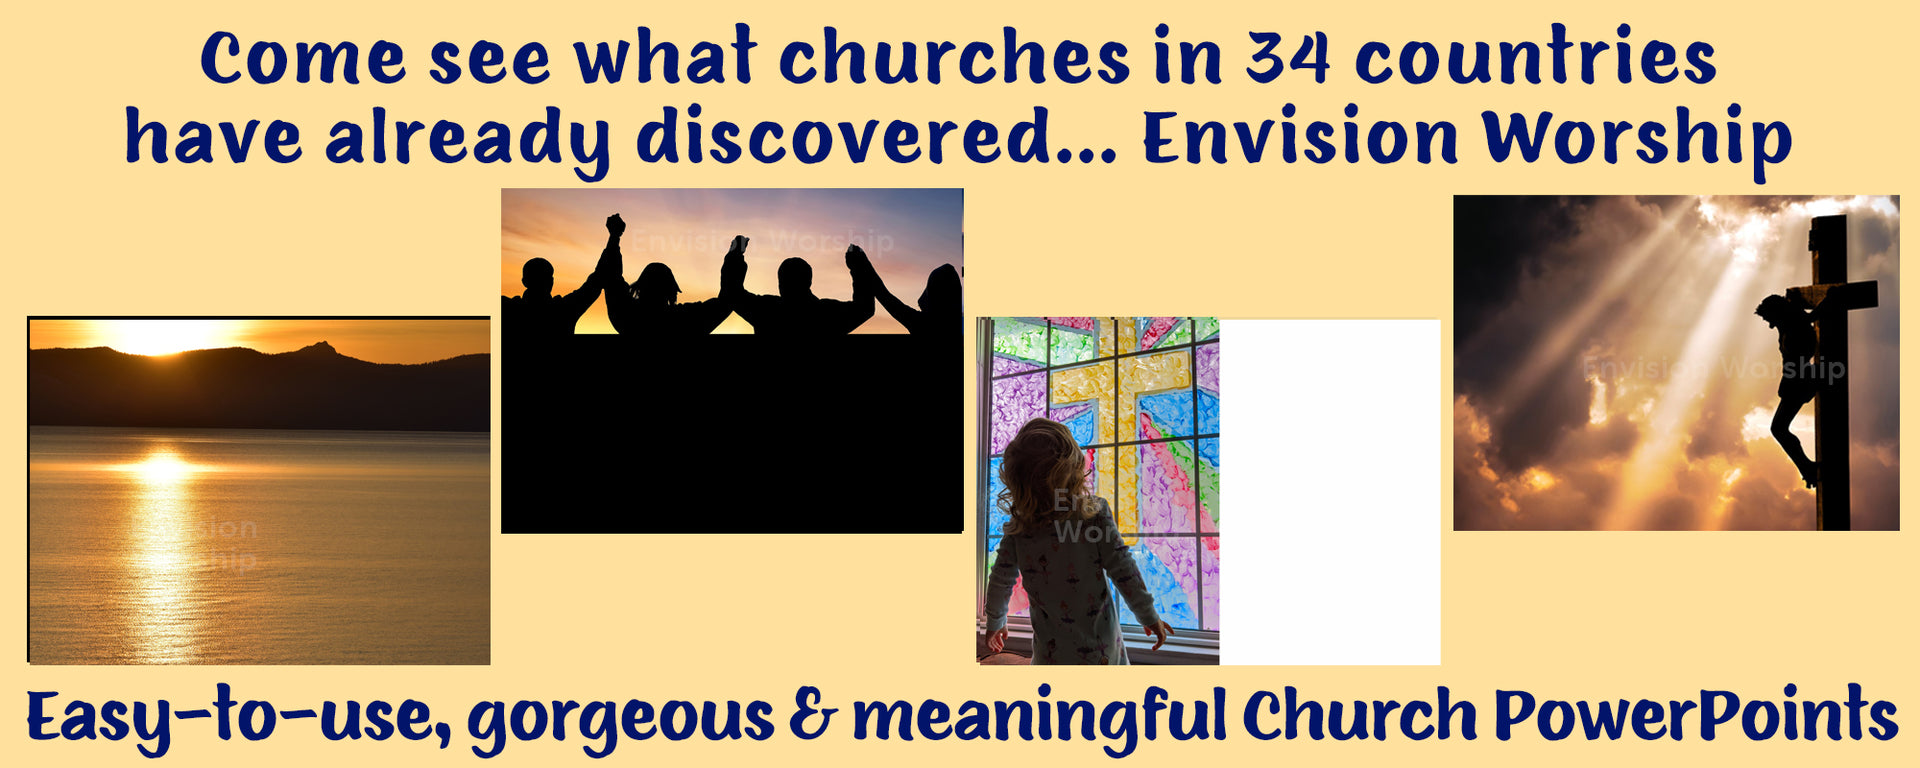 Church PowerPoint presentation template slides for worship